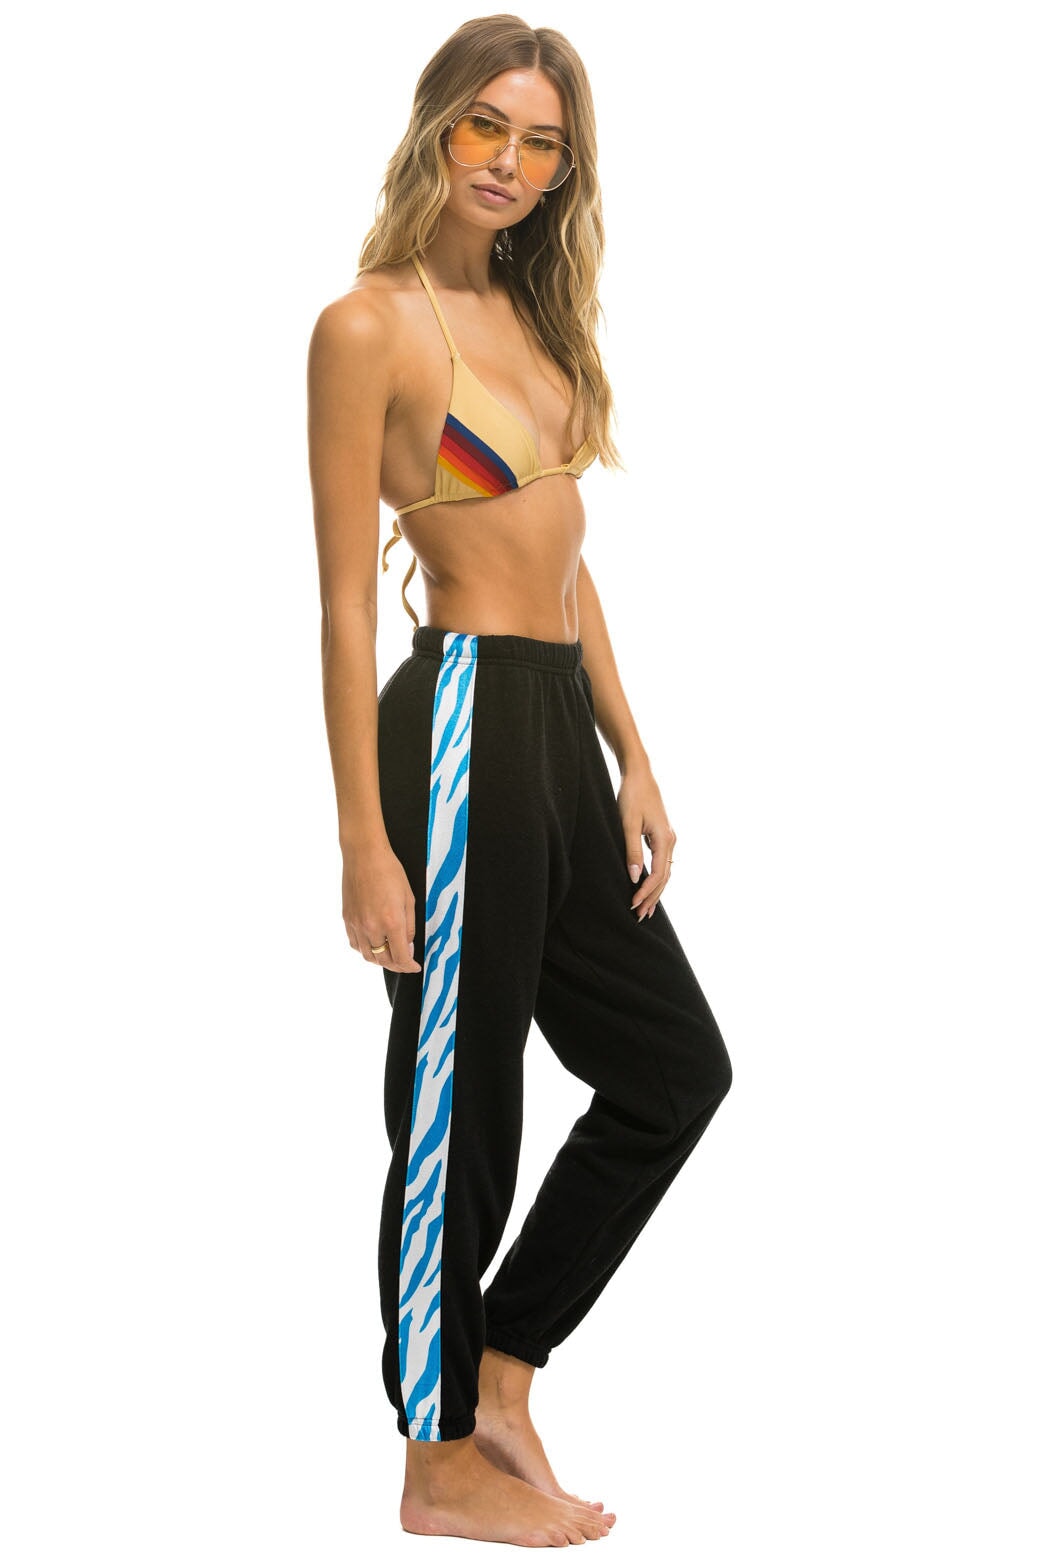 RIOJOY Women's Casual Athletic 2-Stripe Jogger Pants Drawstring Waist  Sweatpants Tracksuit Bottoms with Pockets, Black, L | Gym Store